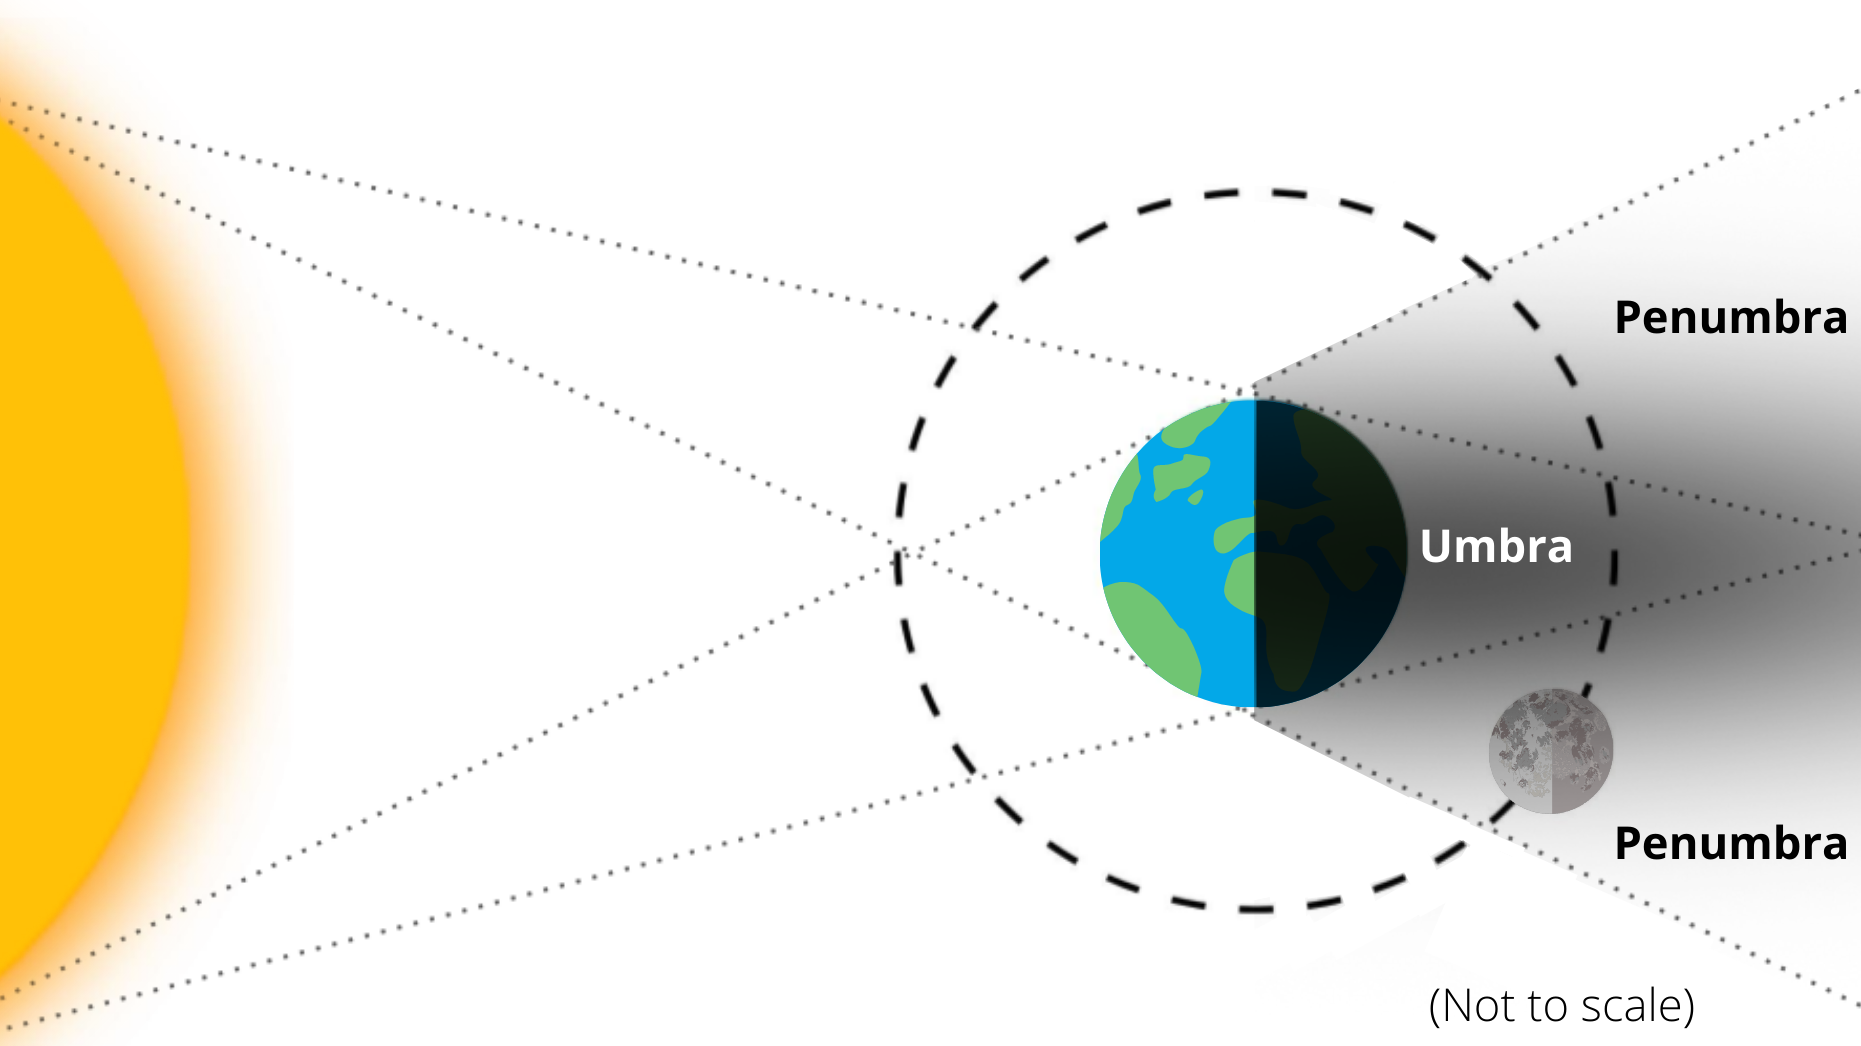 lunar eclipse diagram showing show Earth casts a shadow across the lunar surface.